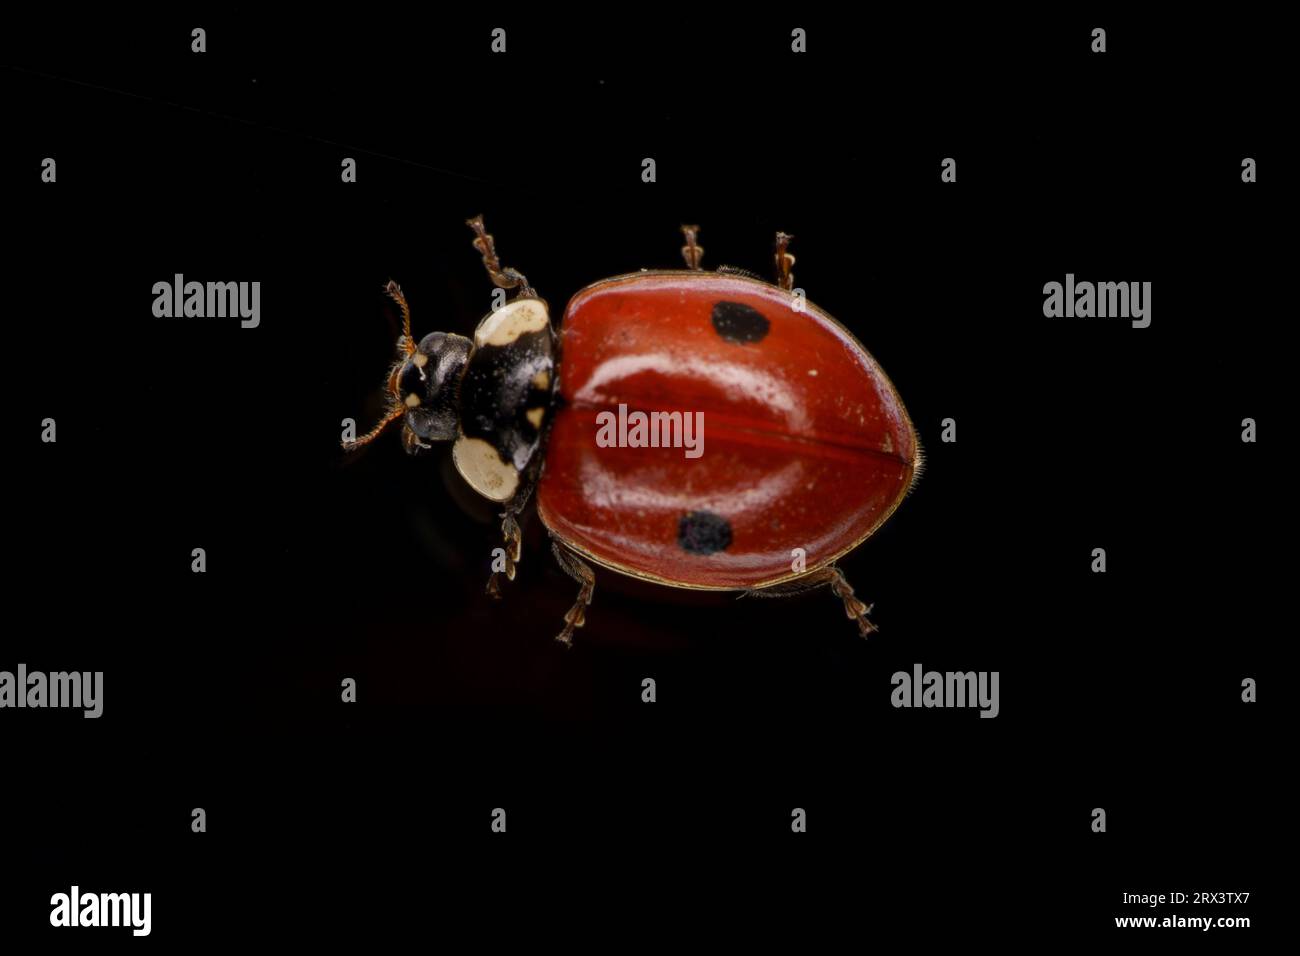 Adalia bipunctata genere Adalia Family Coccinellidae ladybird a due punti ladybug a due macchie carta da parati per insetti selvatici, fotografia, immagine, wallpape Foto Stock